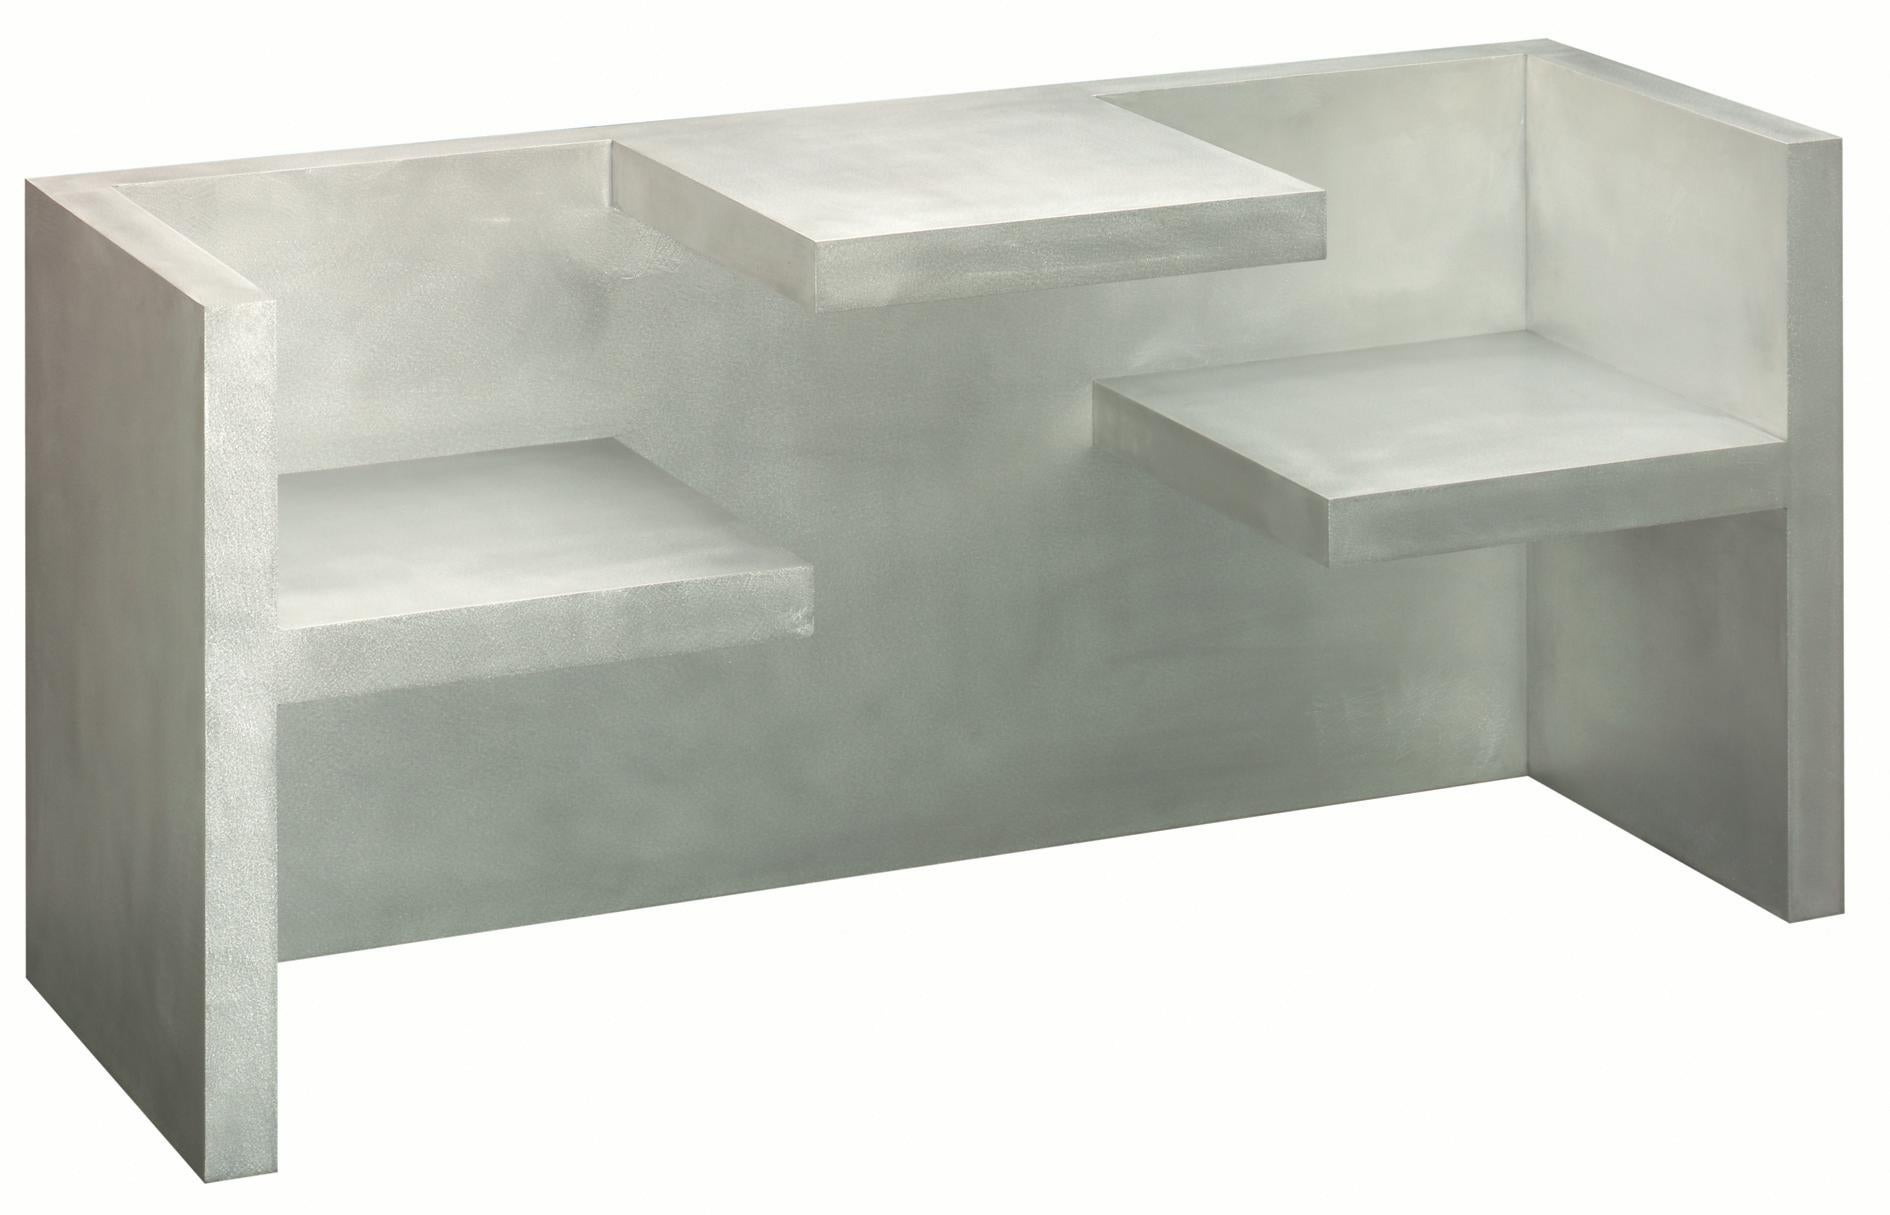 Im Angebot: e15 Tafel Tischbank von Hans De Pelsmacker, Gray (Brushed Aluminum)